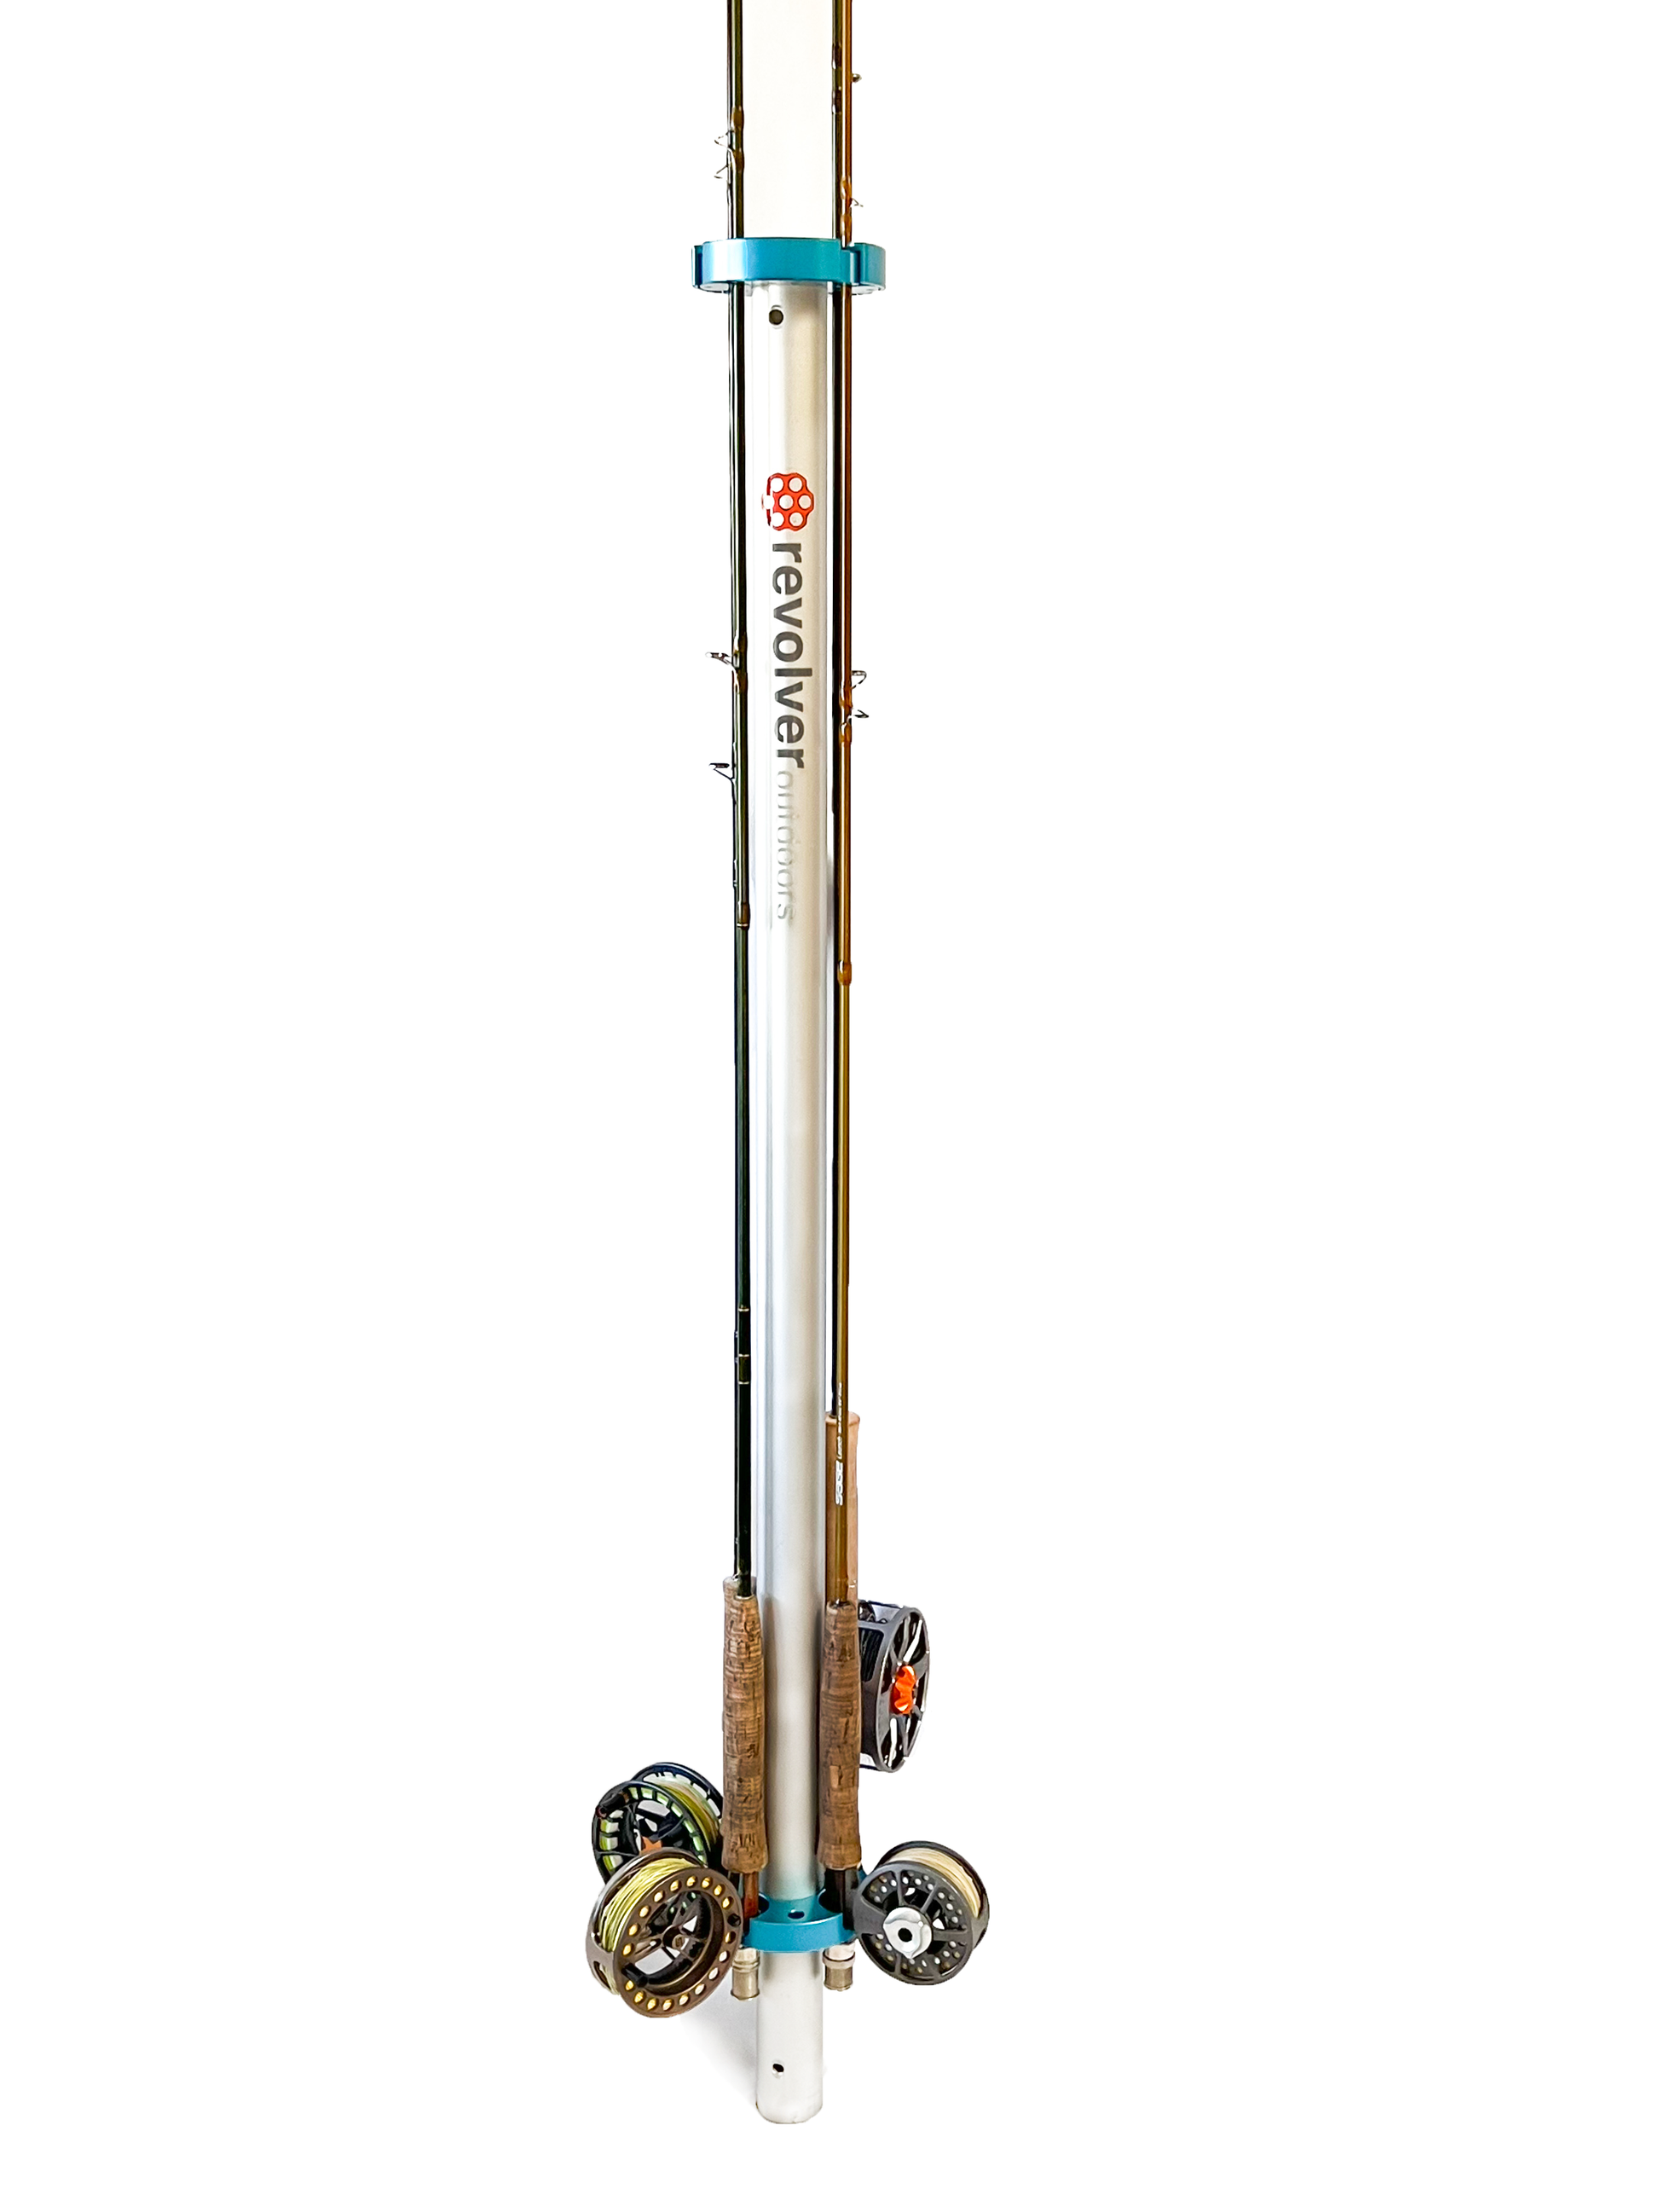 Outdoor Multifunctional Vertical 3-Link Fishing Rod Storage Holder